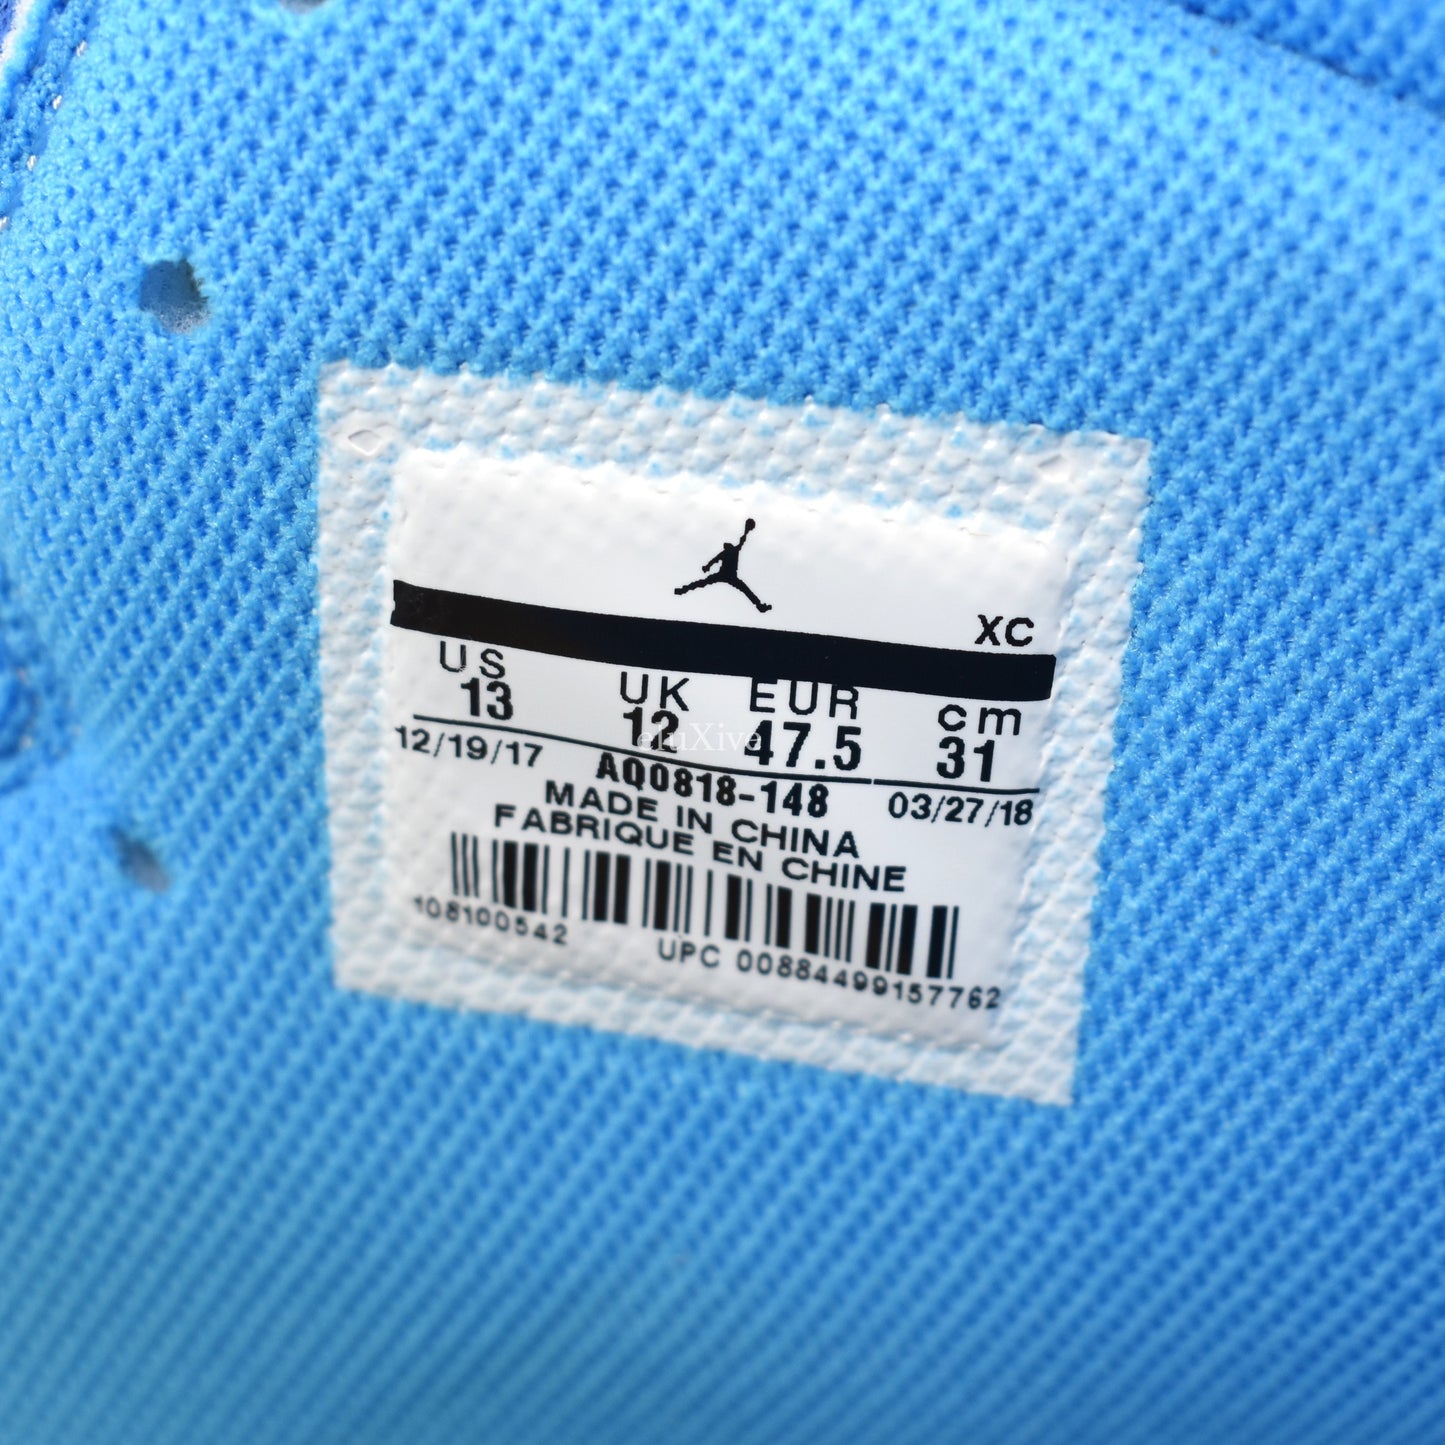 Nike x Off-White - Air Jordan 1 NRG 'UNC'